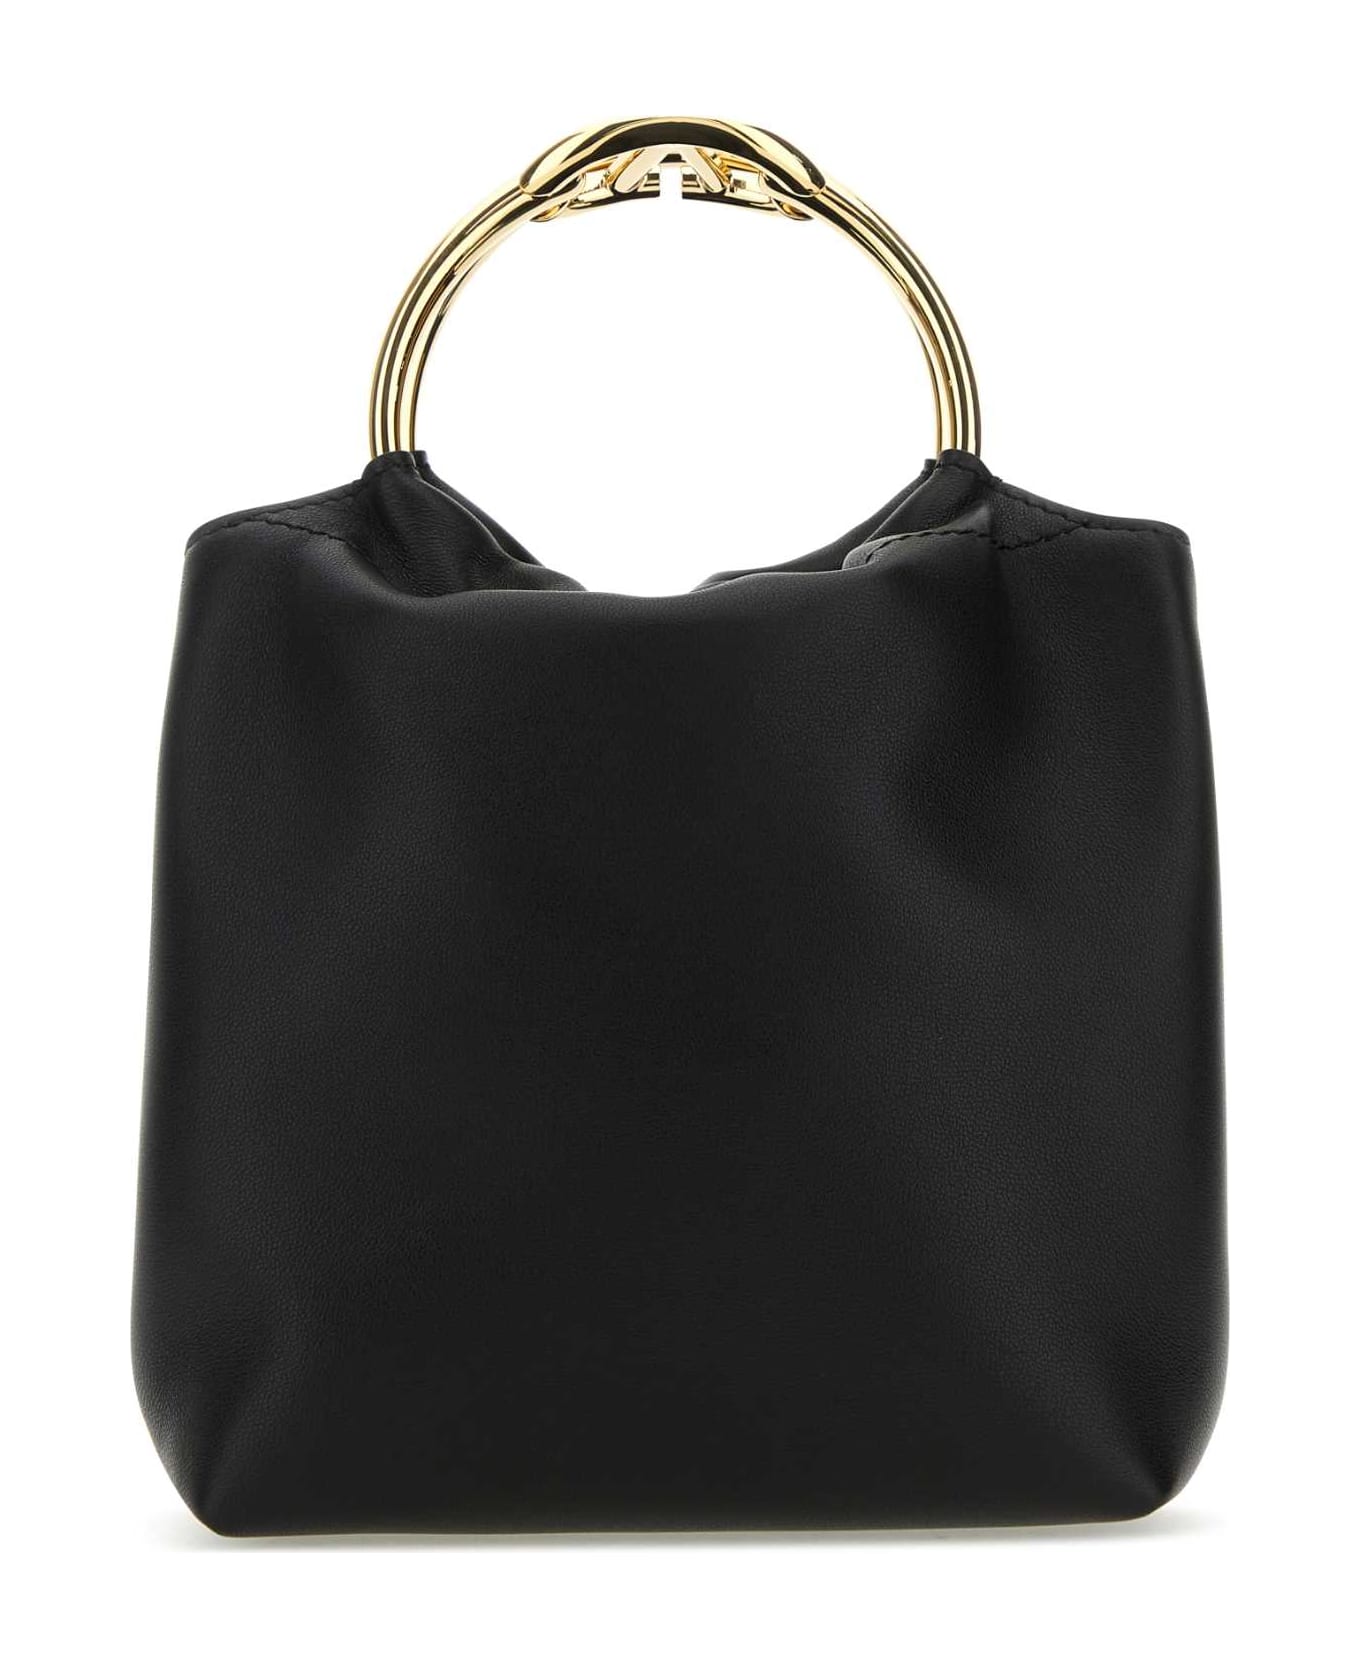 Valentino Garavani Black Leather Bucket Bag - NERO